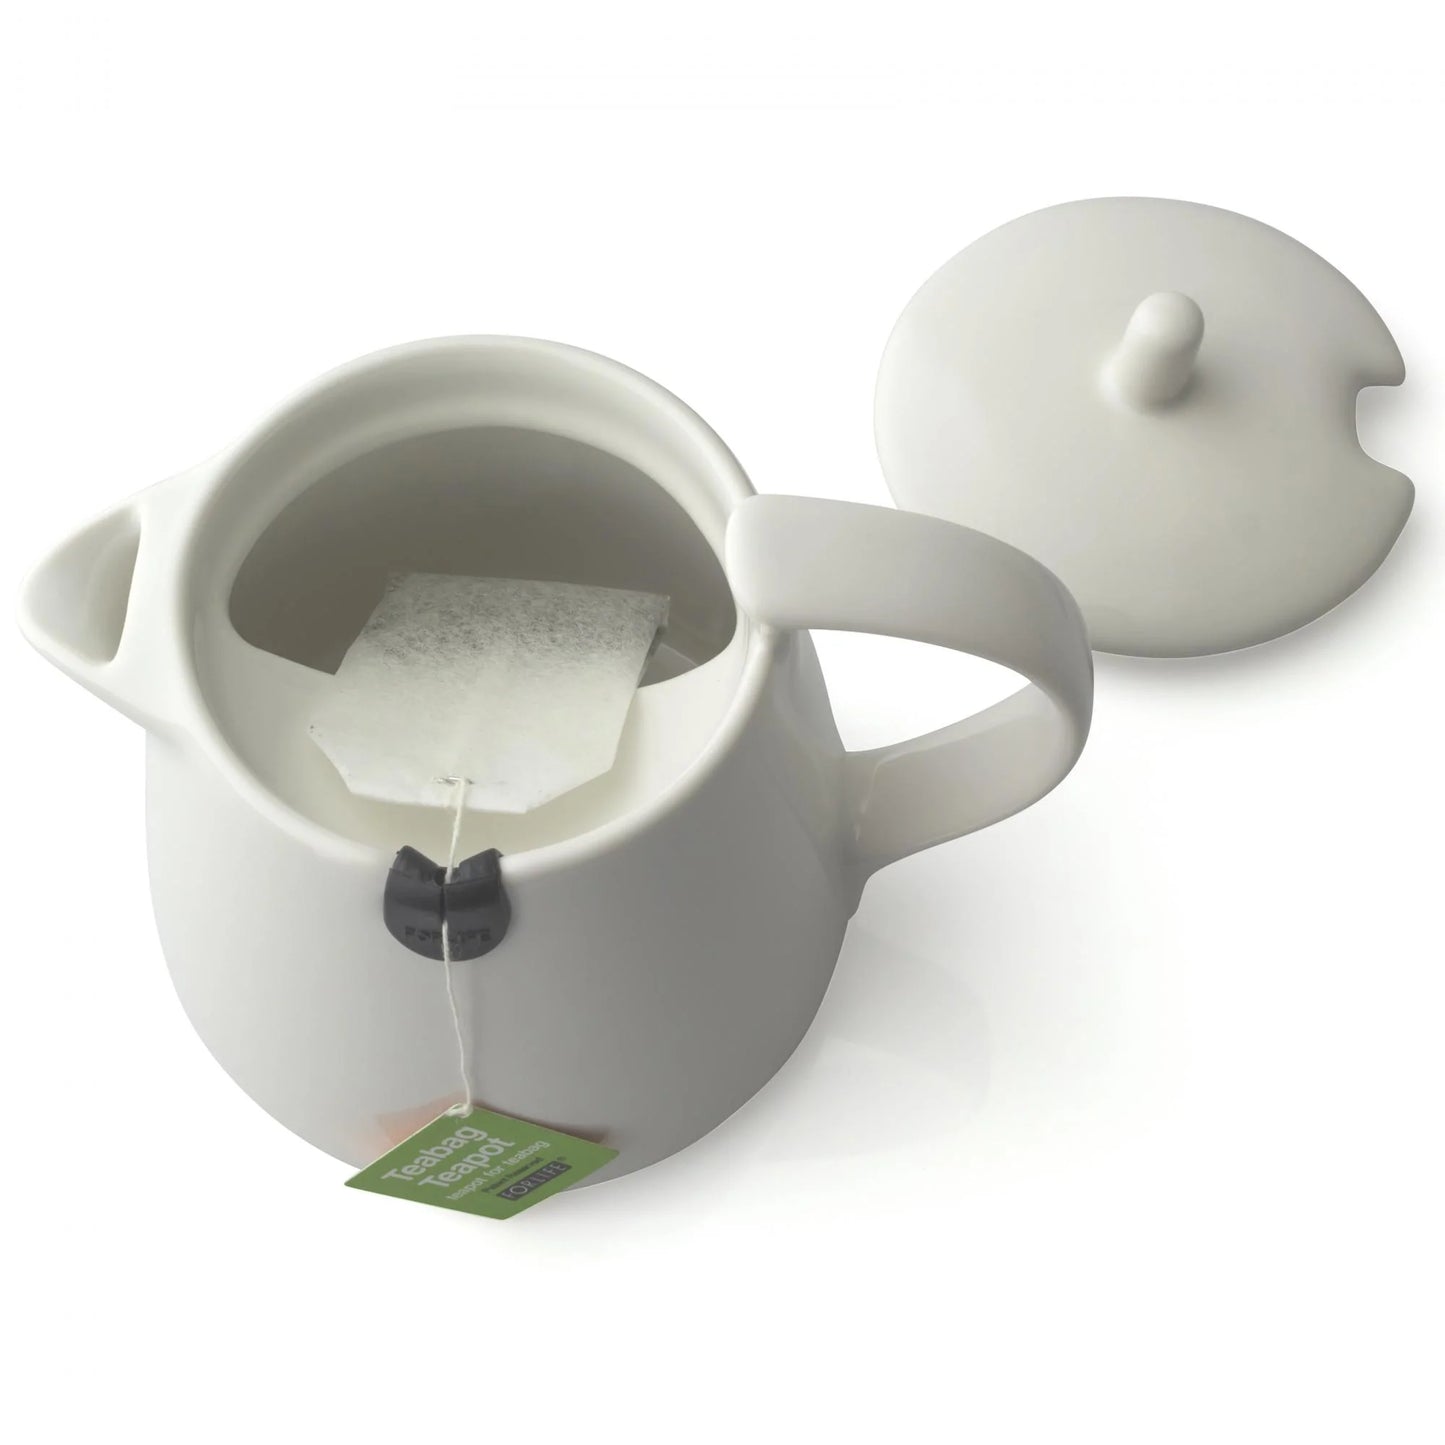 【FORLIFE】Tea Pot / 【FORLIFE】ティー・ポット